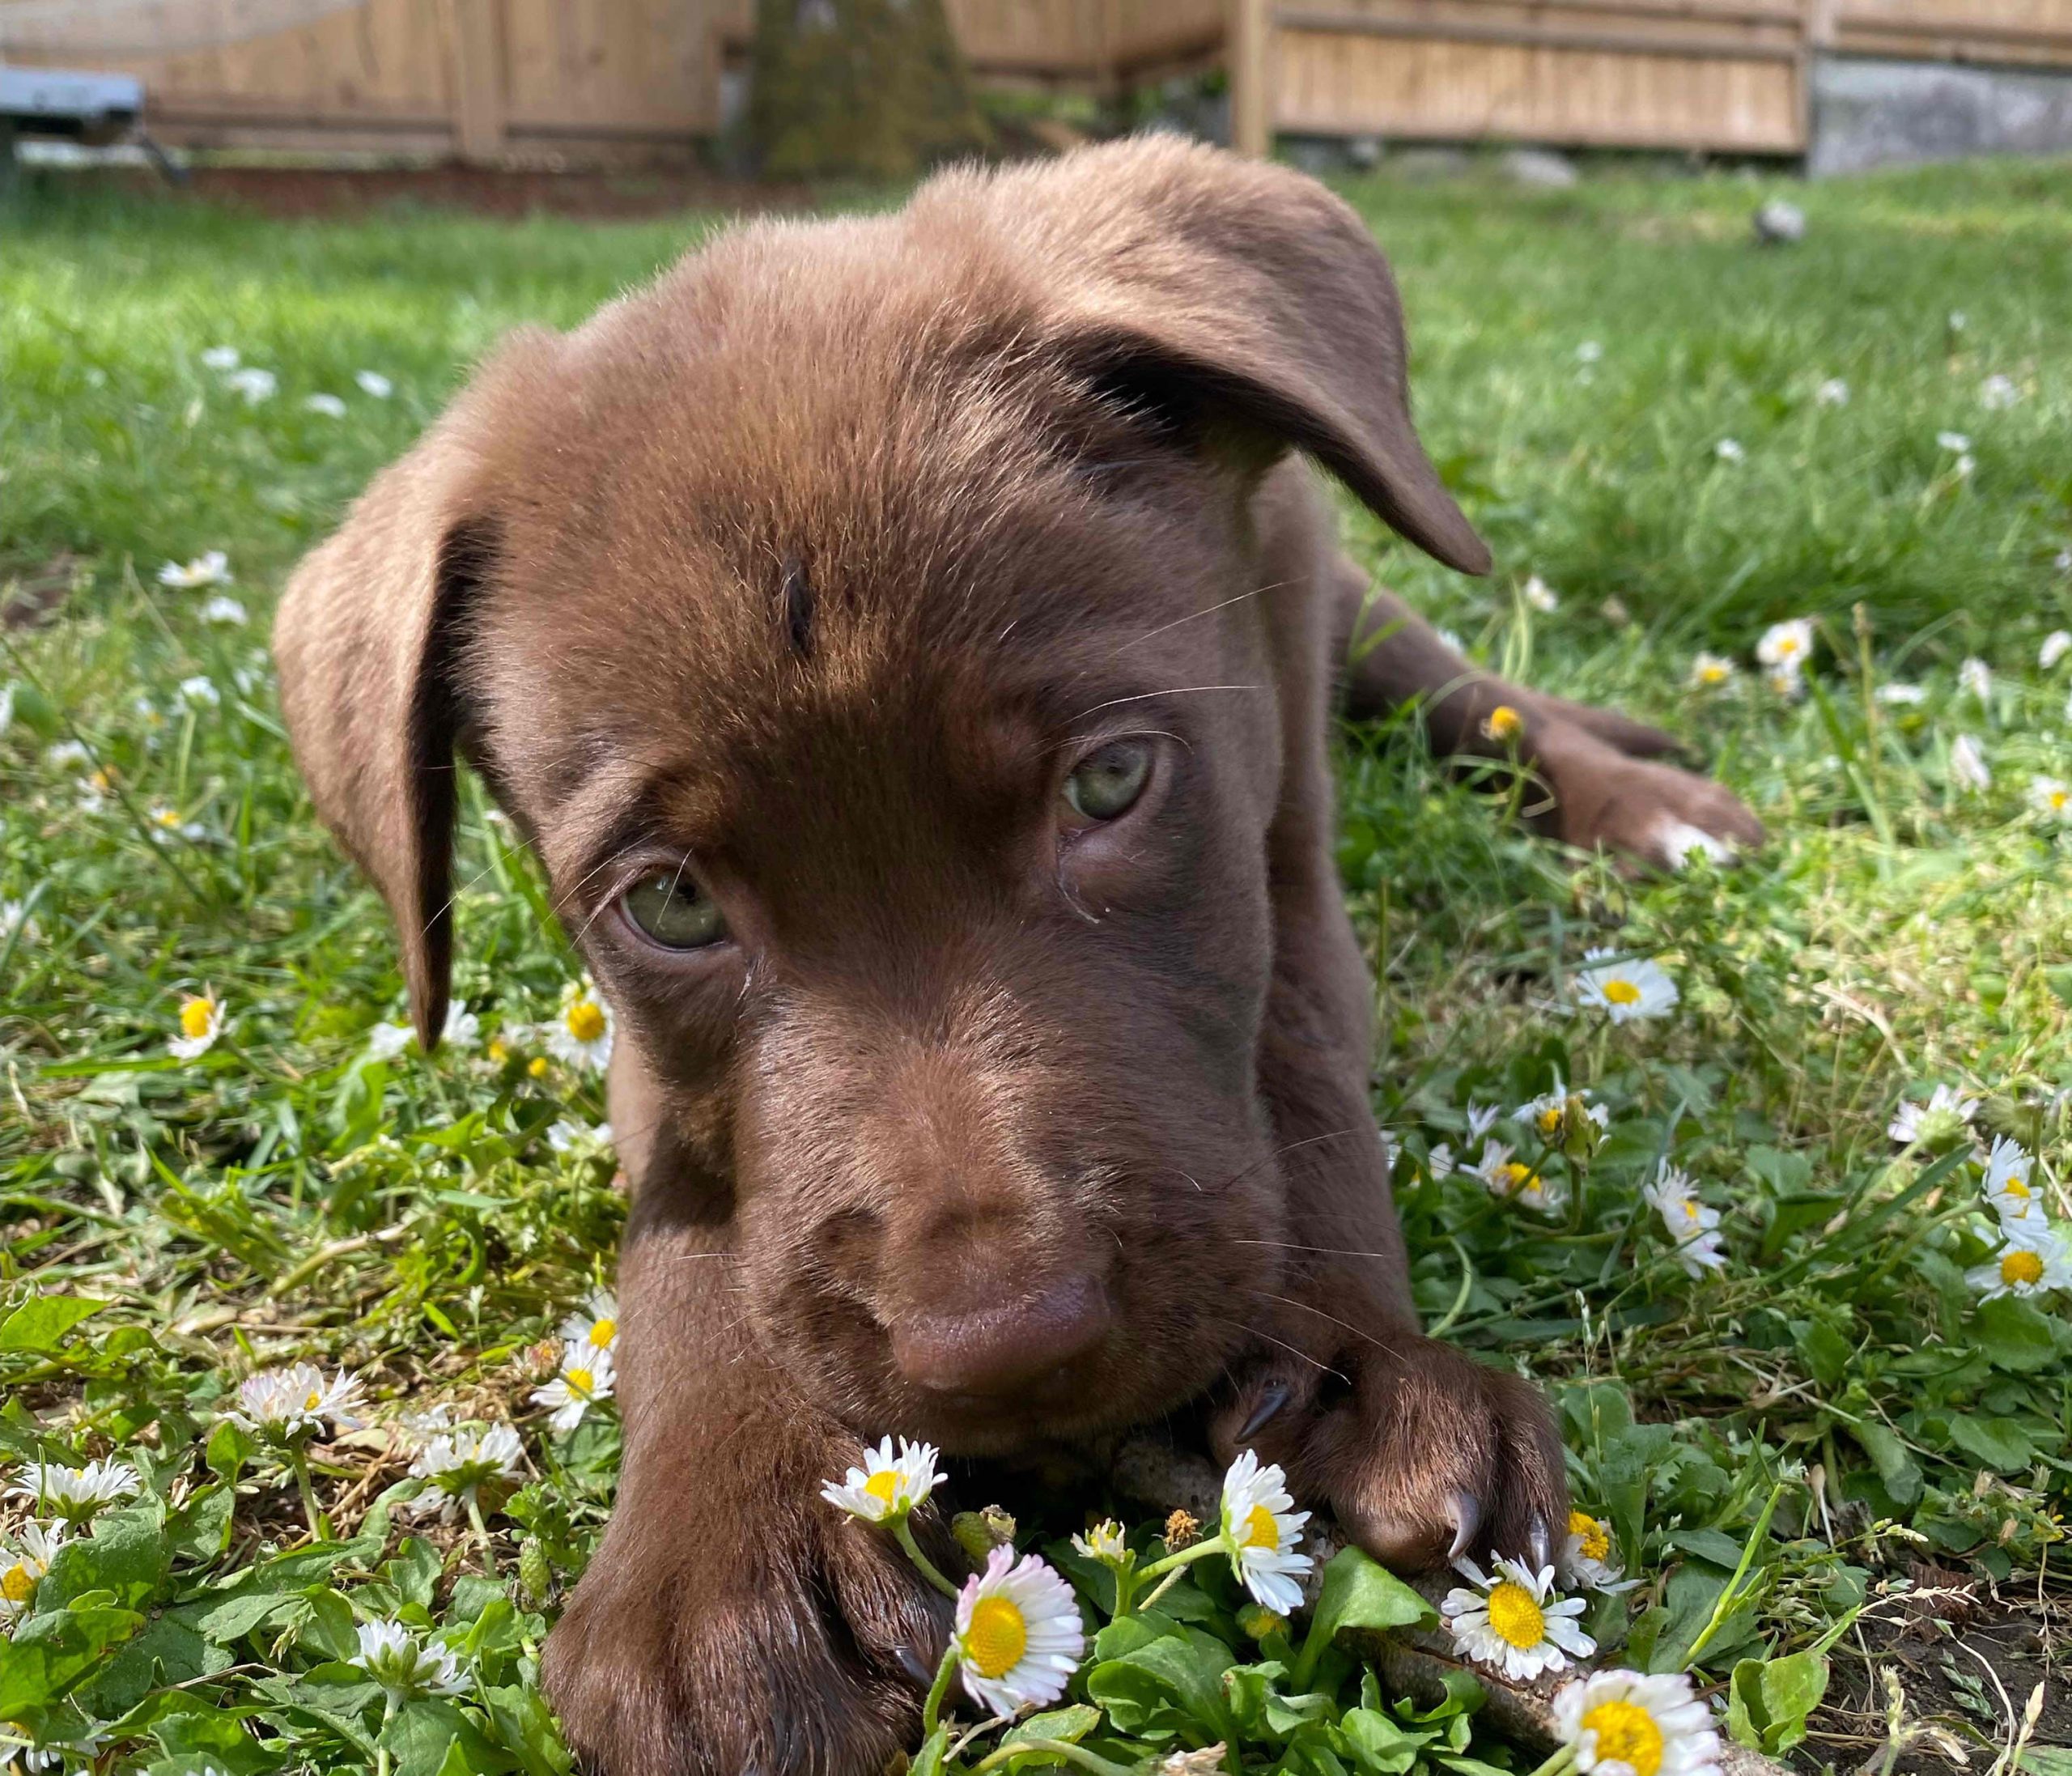 A brown puppy in the grass. Photo by Anna Alva.